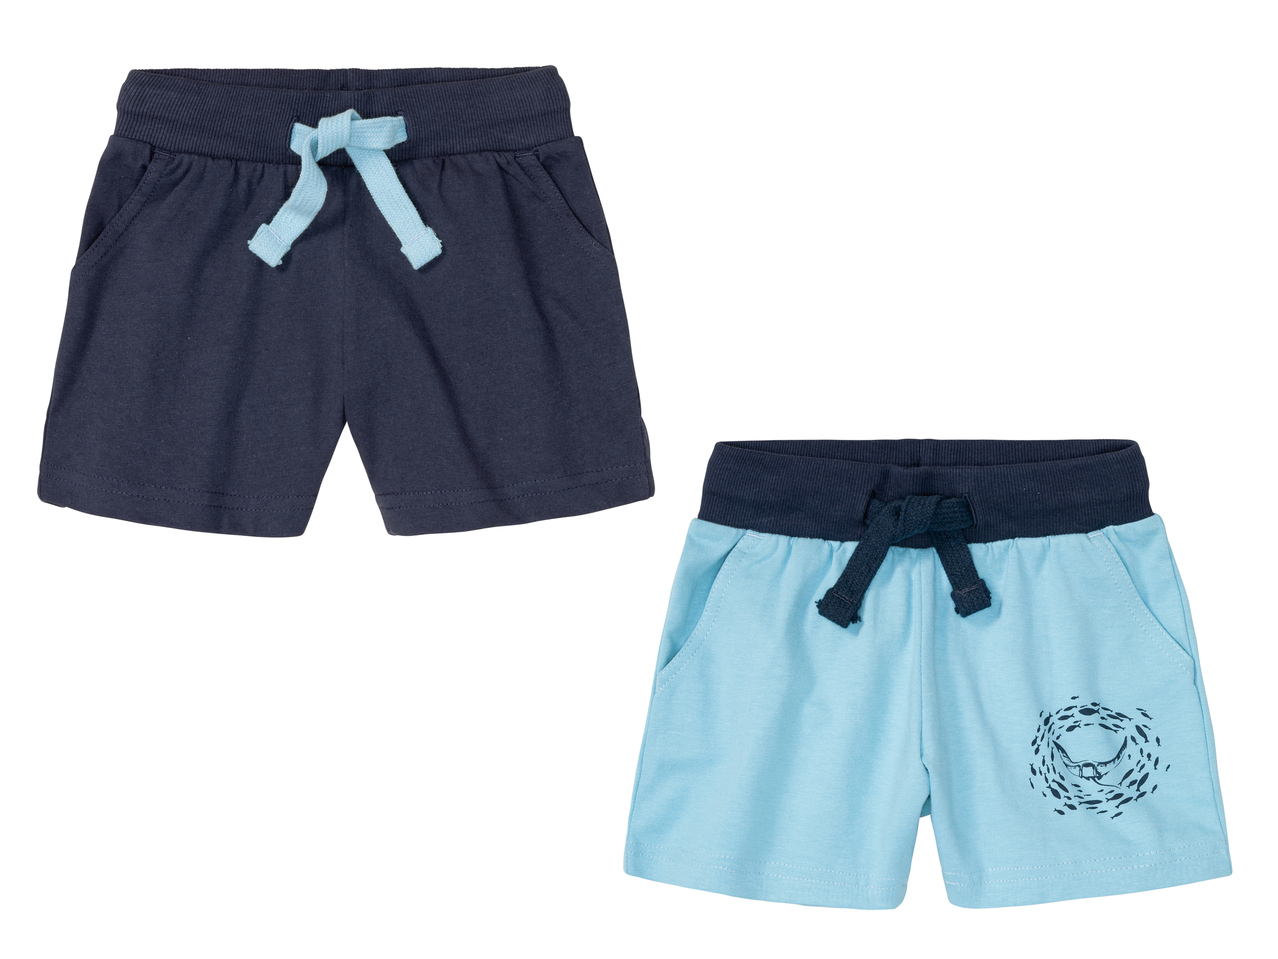 Shorts da bambino , prezzo 4.99 EUR 
Shorts da bambino 2 pezzi - Misure: 1-6 anni ...